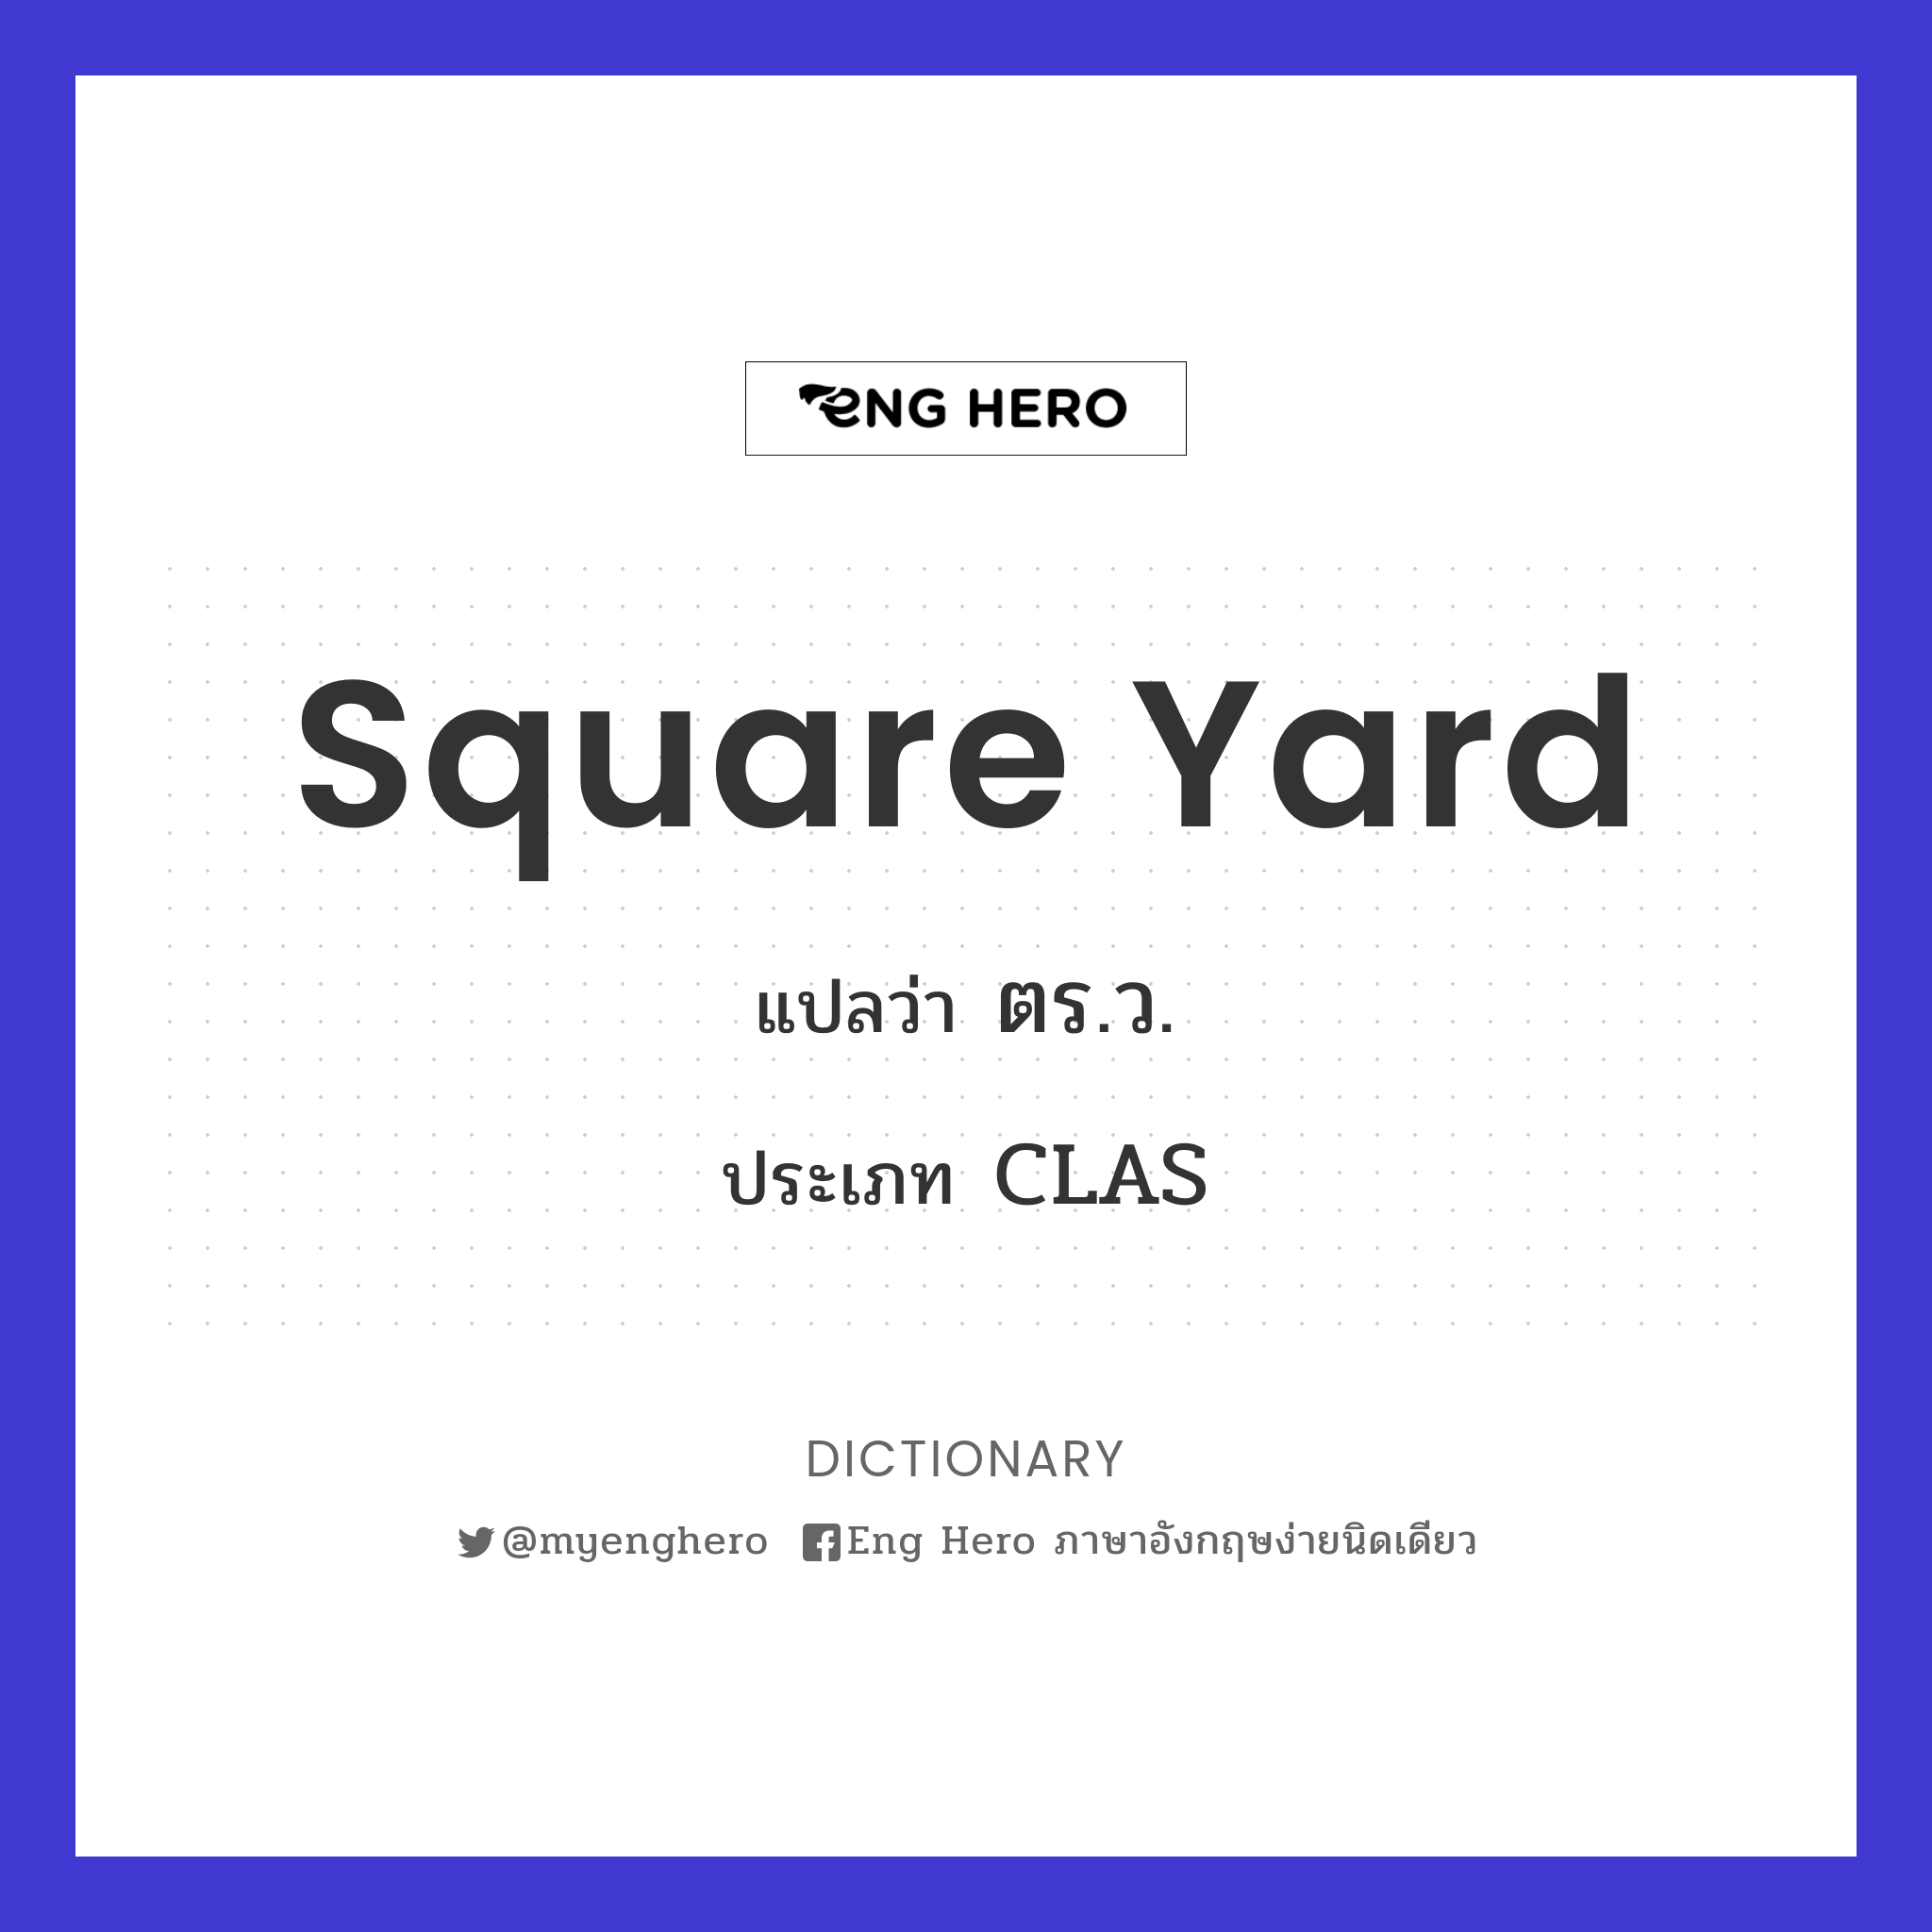 square yard